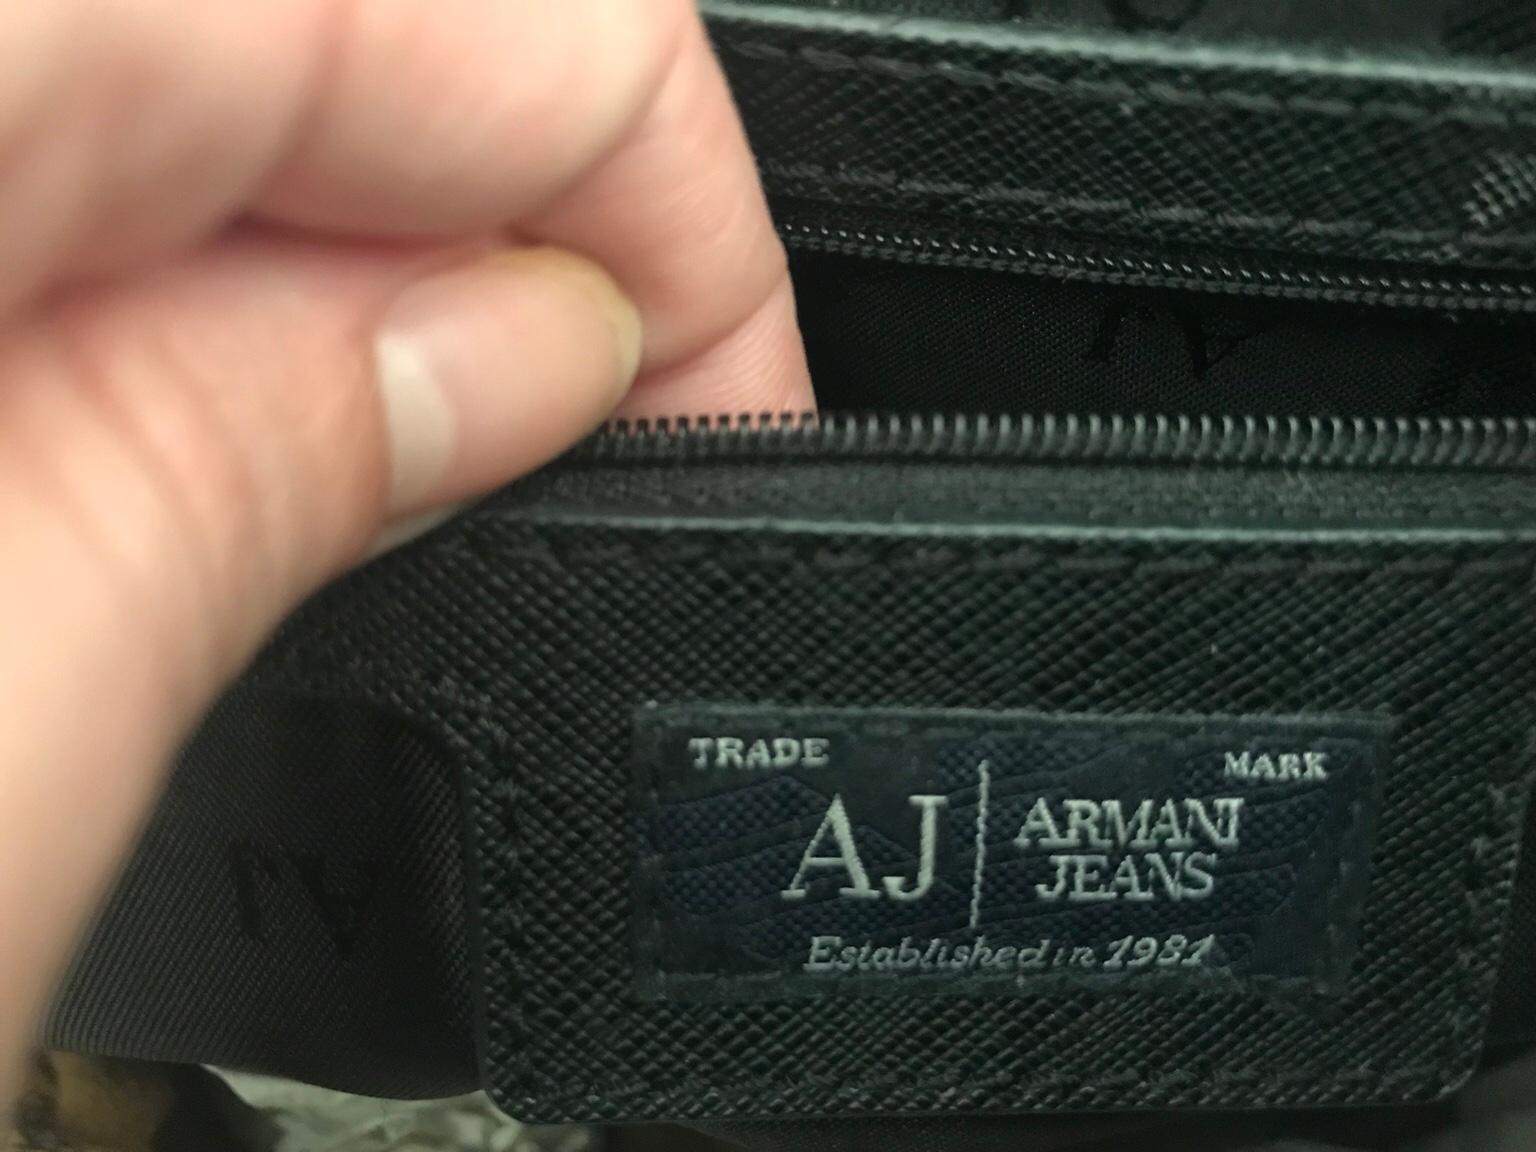 armani jeans established 1981 trademark